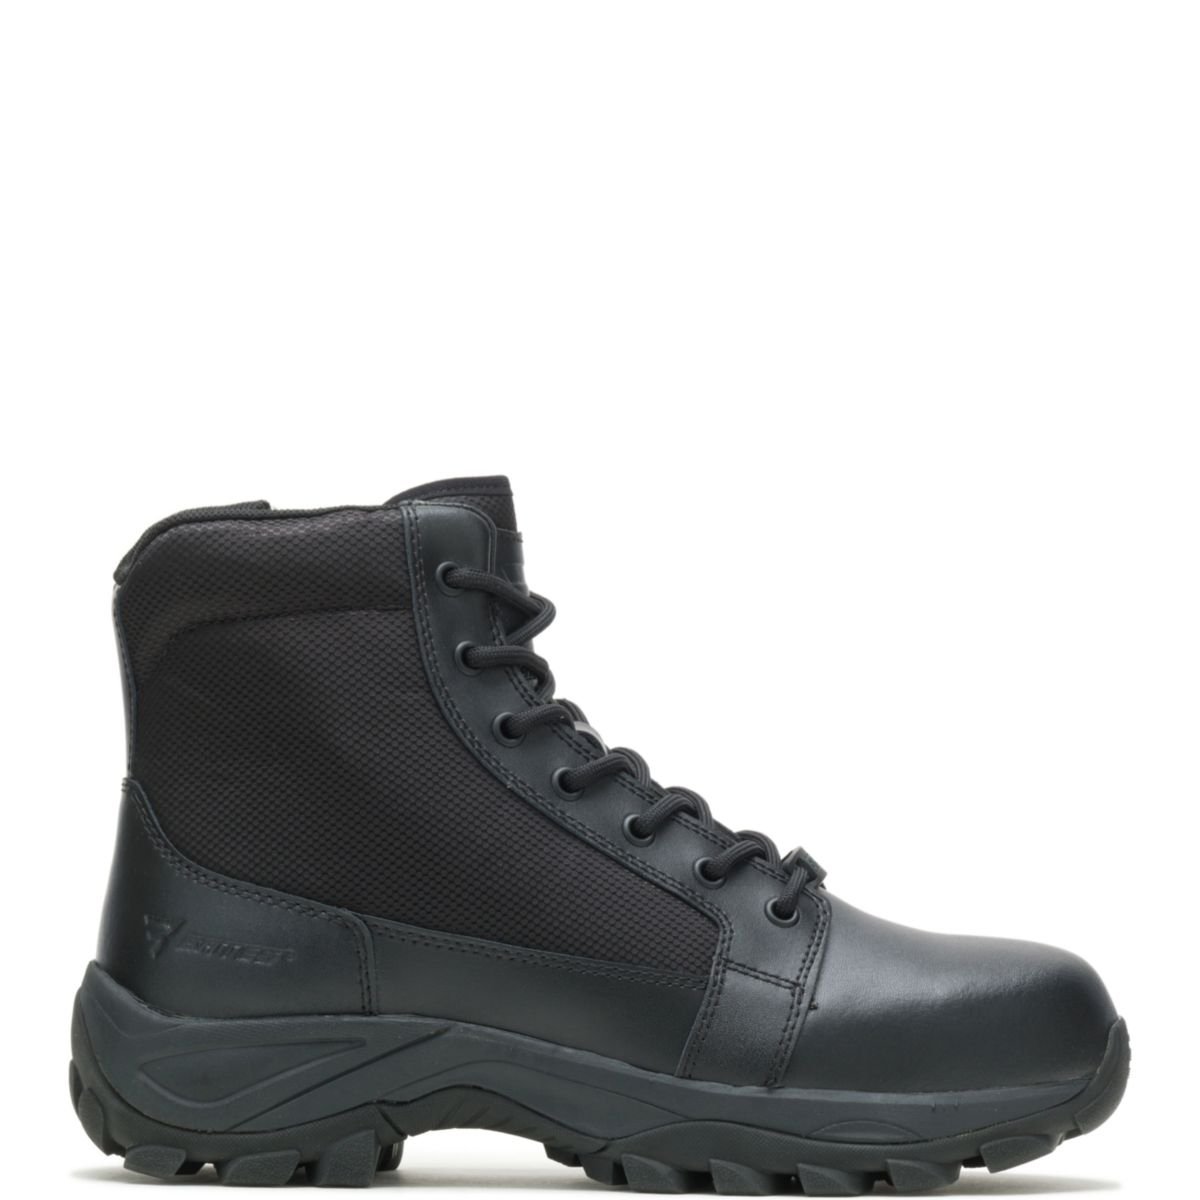 Bates Men's Fuse Zip 6-Inch Side Zip Steel Toe Work Boot Black - E06505 BLACK - BLACK, 9.5